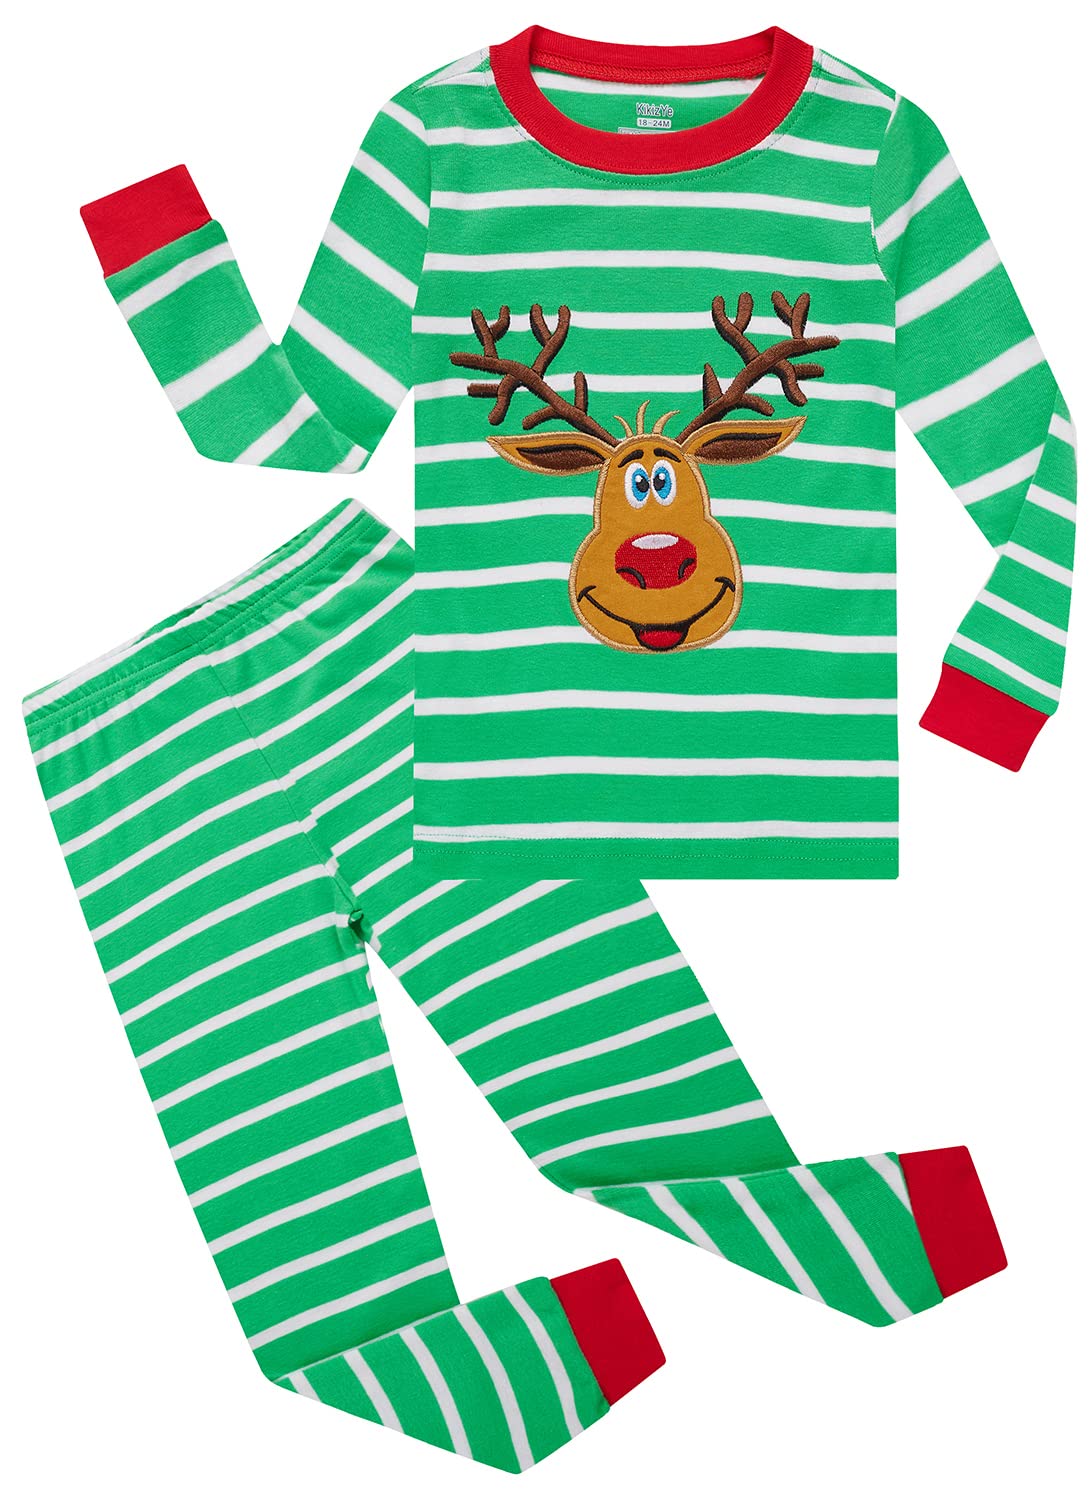 Kikizye Christmas Baby Girls Boys Pjs 100 Cotton Long Sleeve Kids Infant Reindeer Pajamas Sets Size 12-18 Months Green